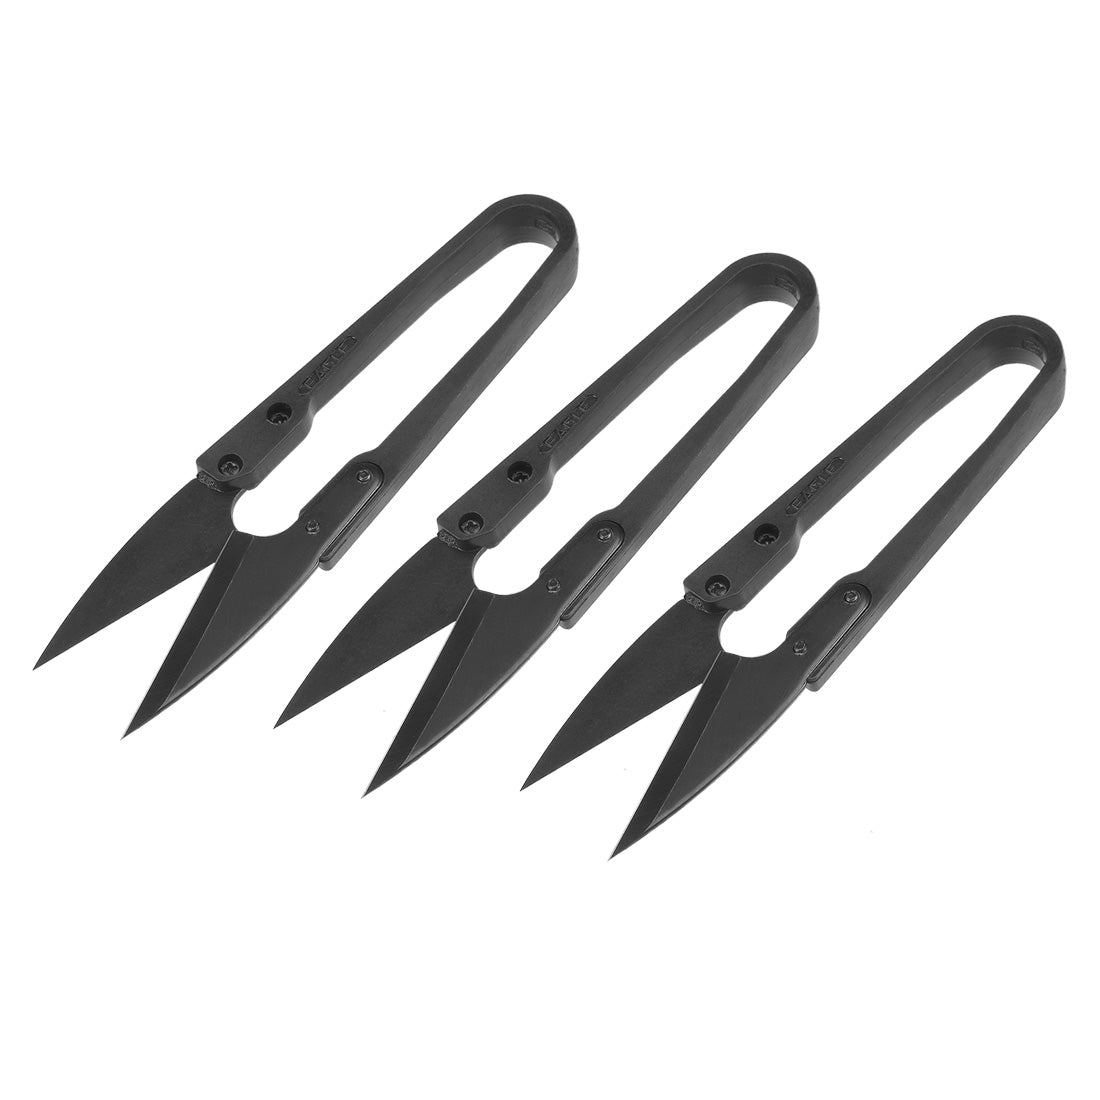 Metal Sewing Snips Thread Cutter Yarn Scissors Nipper